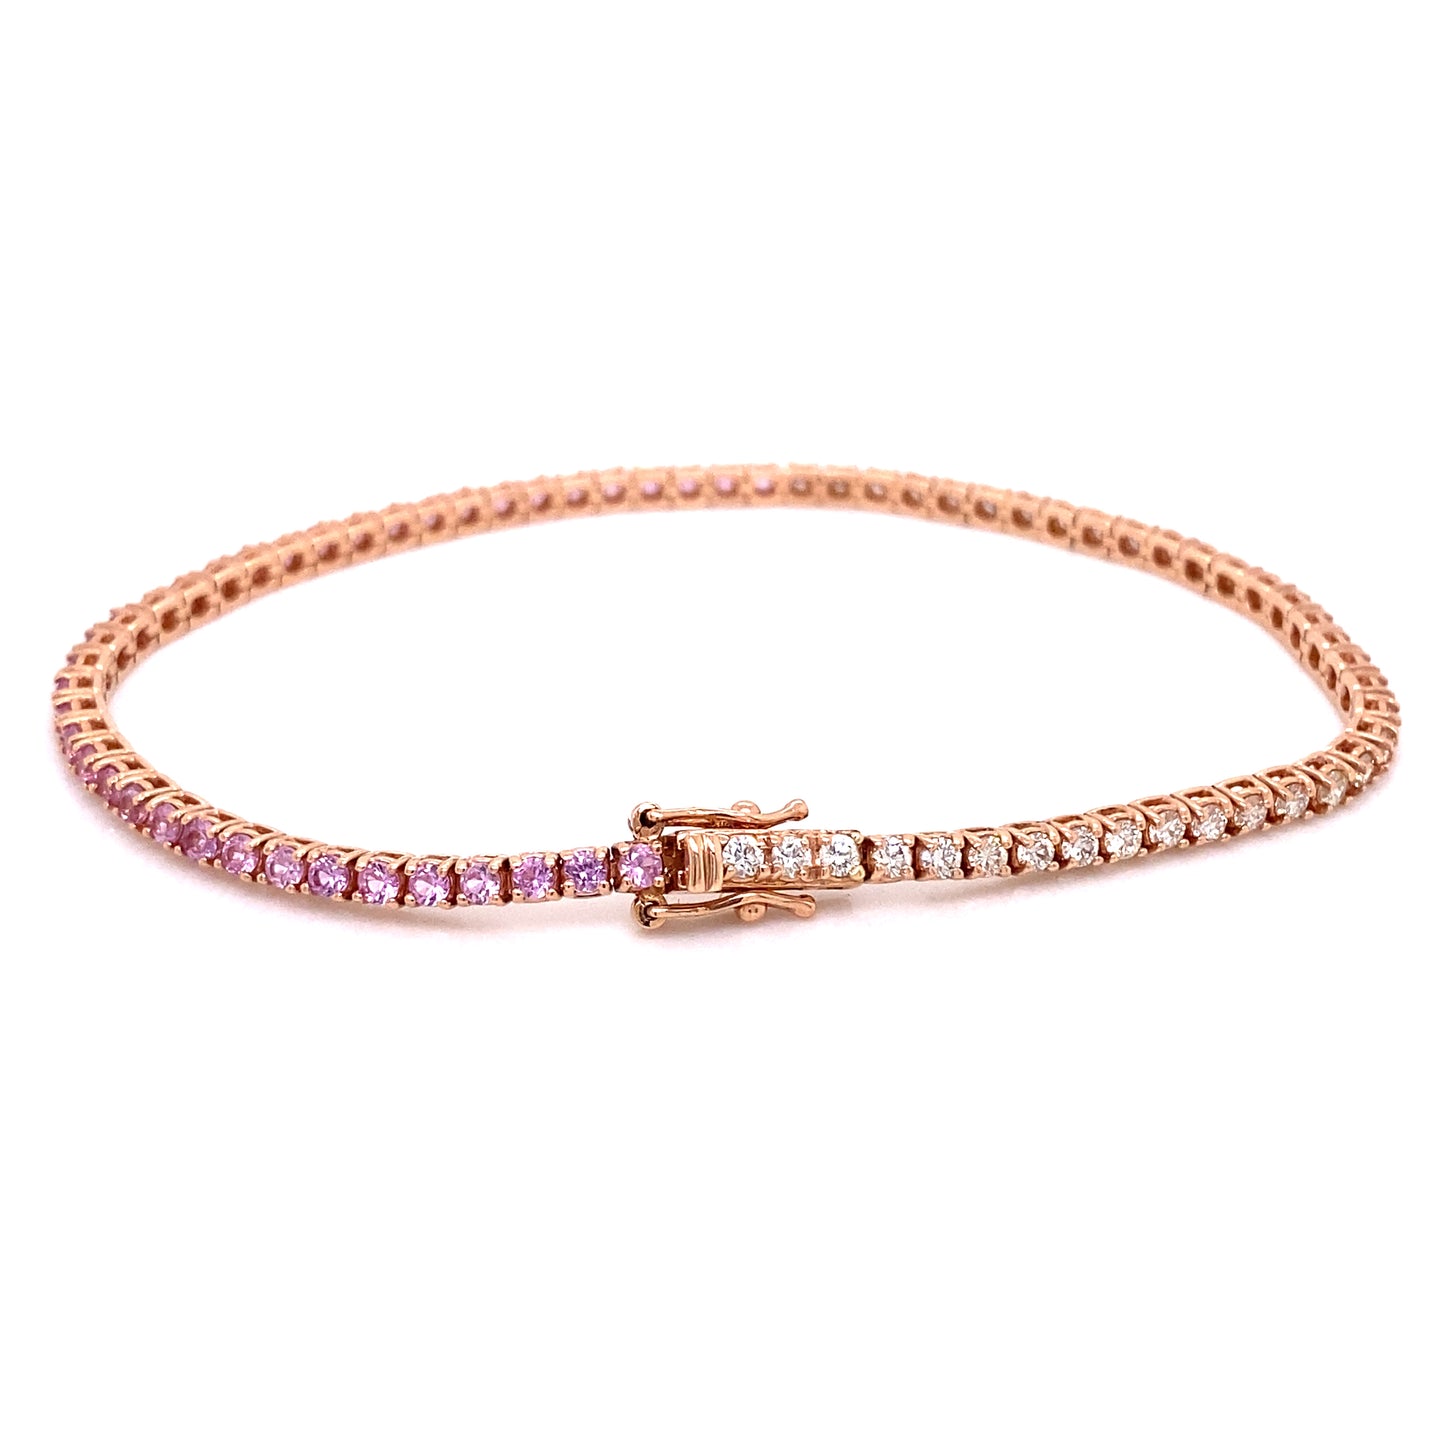 SINGLE PIECE / Tennis bracelet with pink sapphire and half diamonds